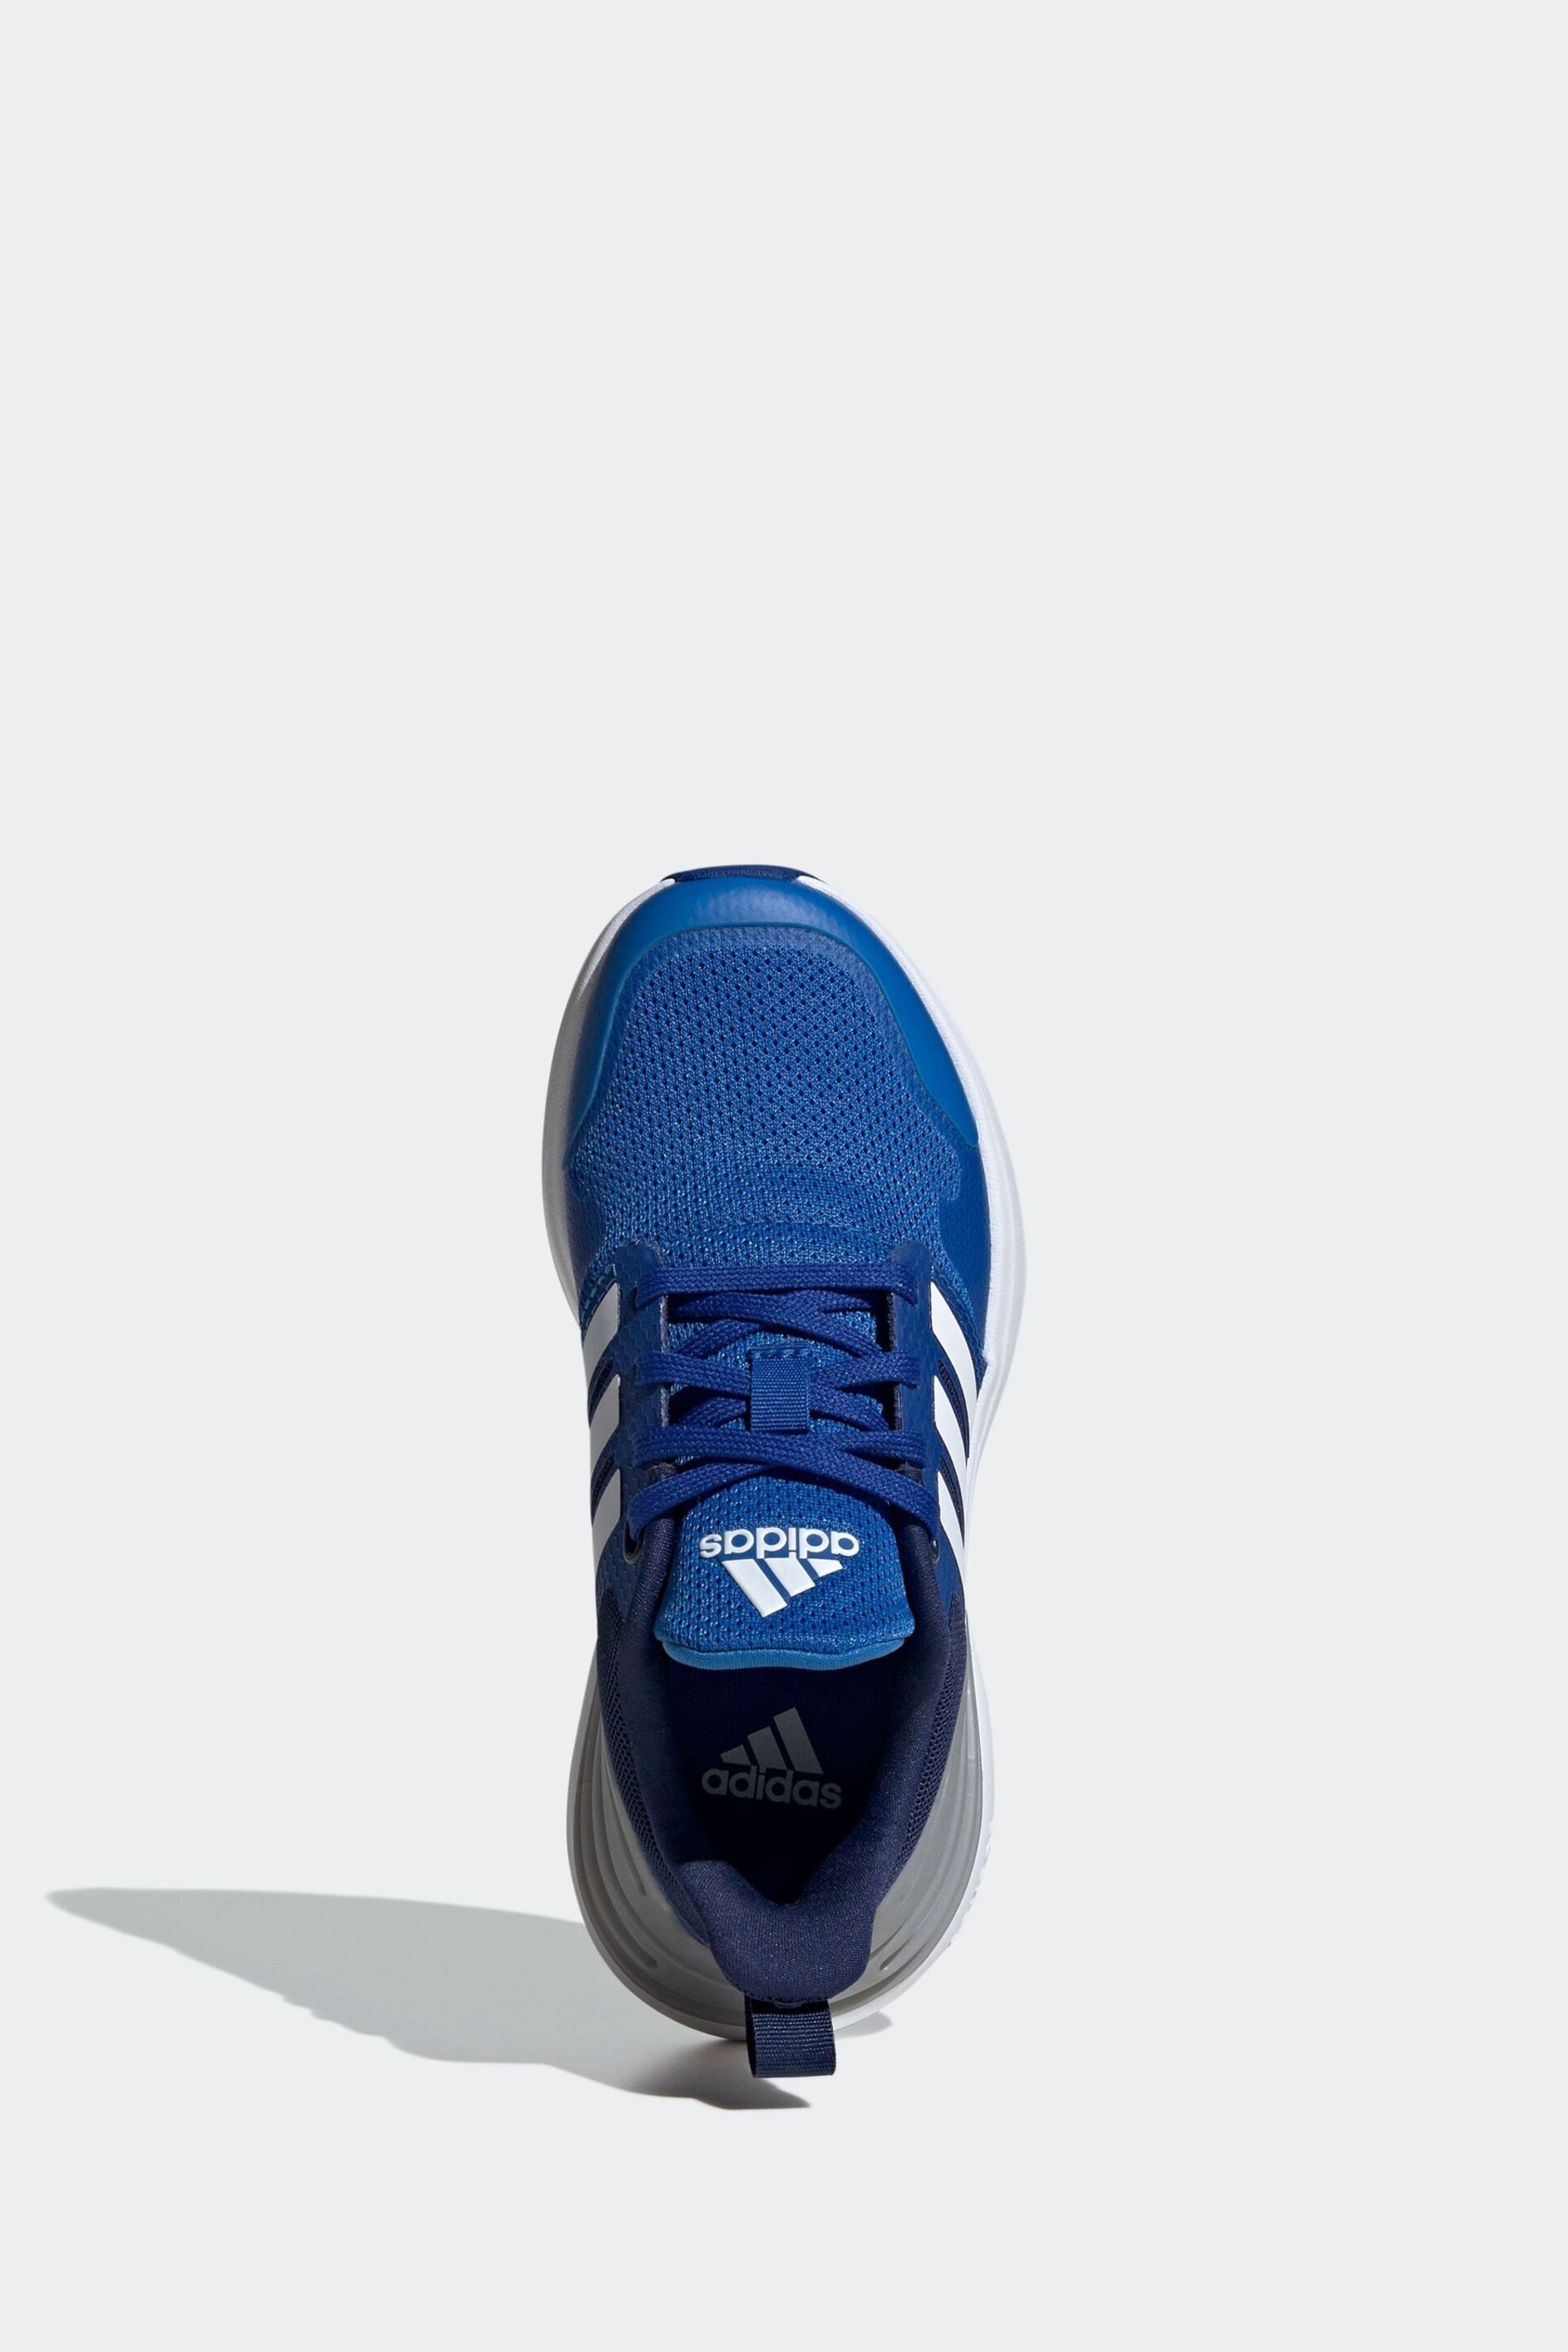 adidas Blue Sportswear Kids Rapidasport Bounce Lace Trainers - Image 5 of 9